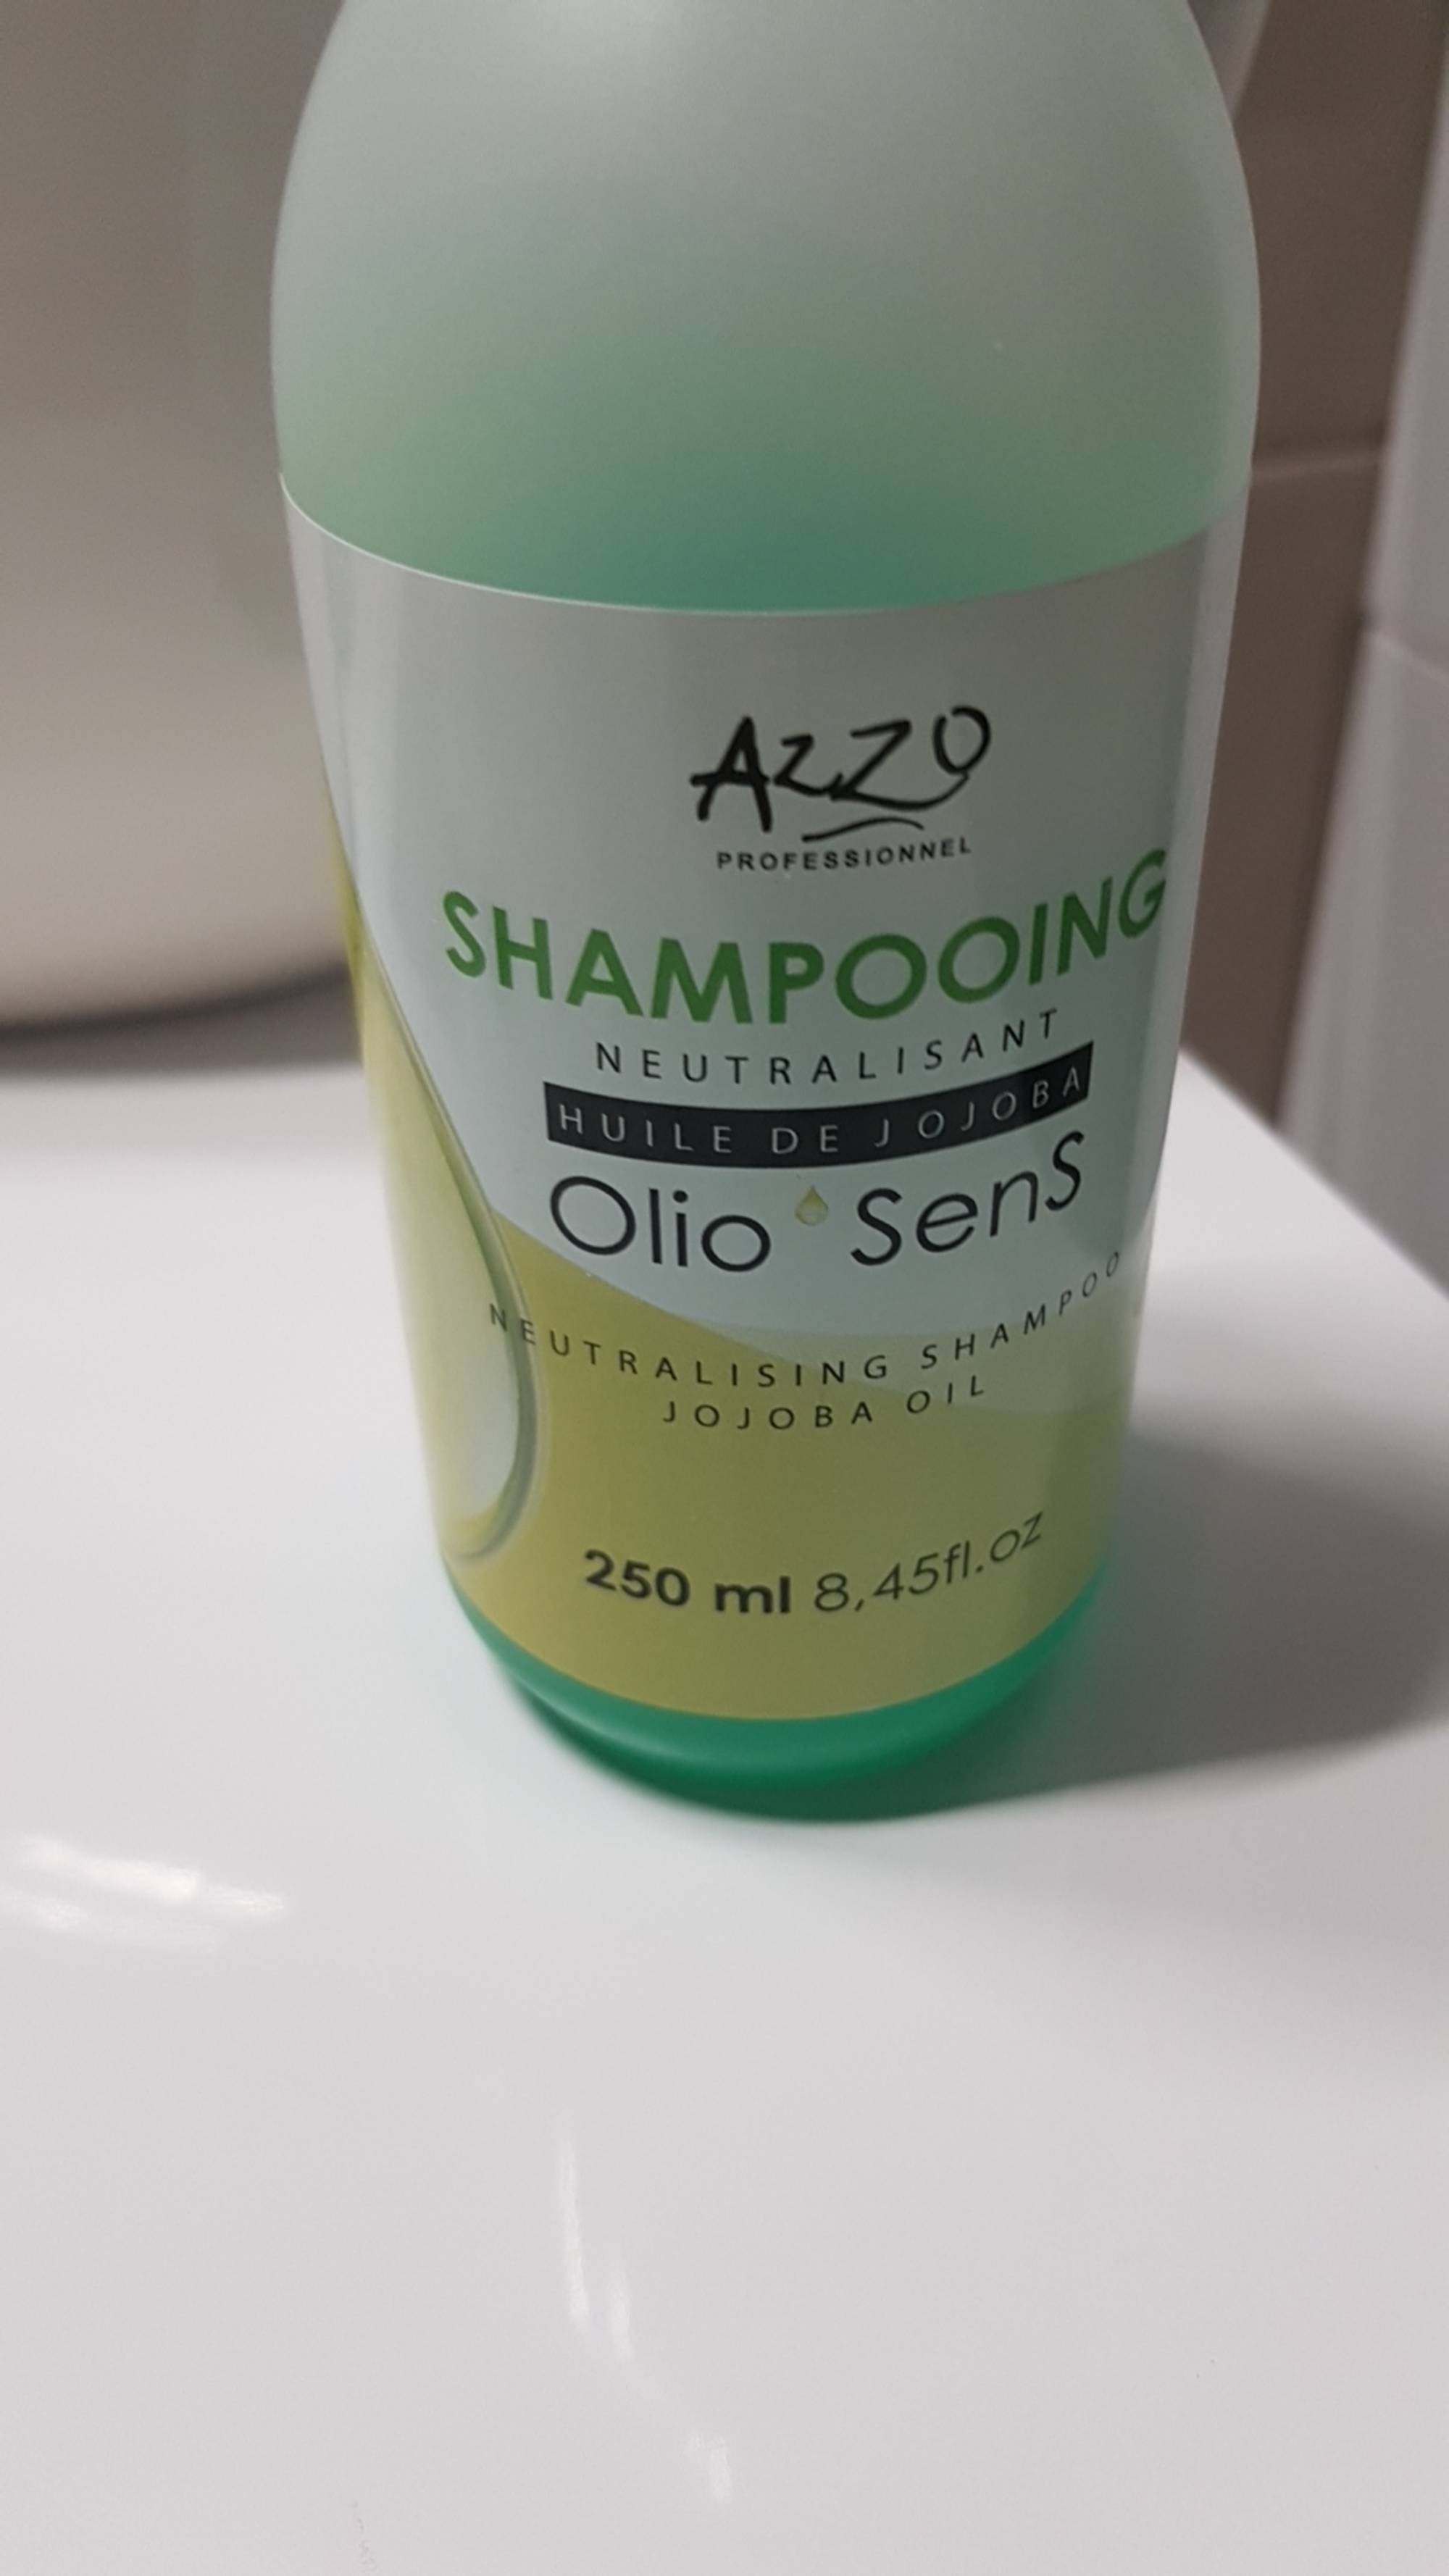 AZZO - Olio sens - Shampooing neutralisant